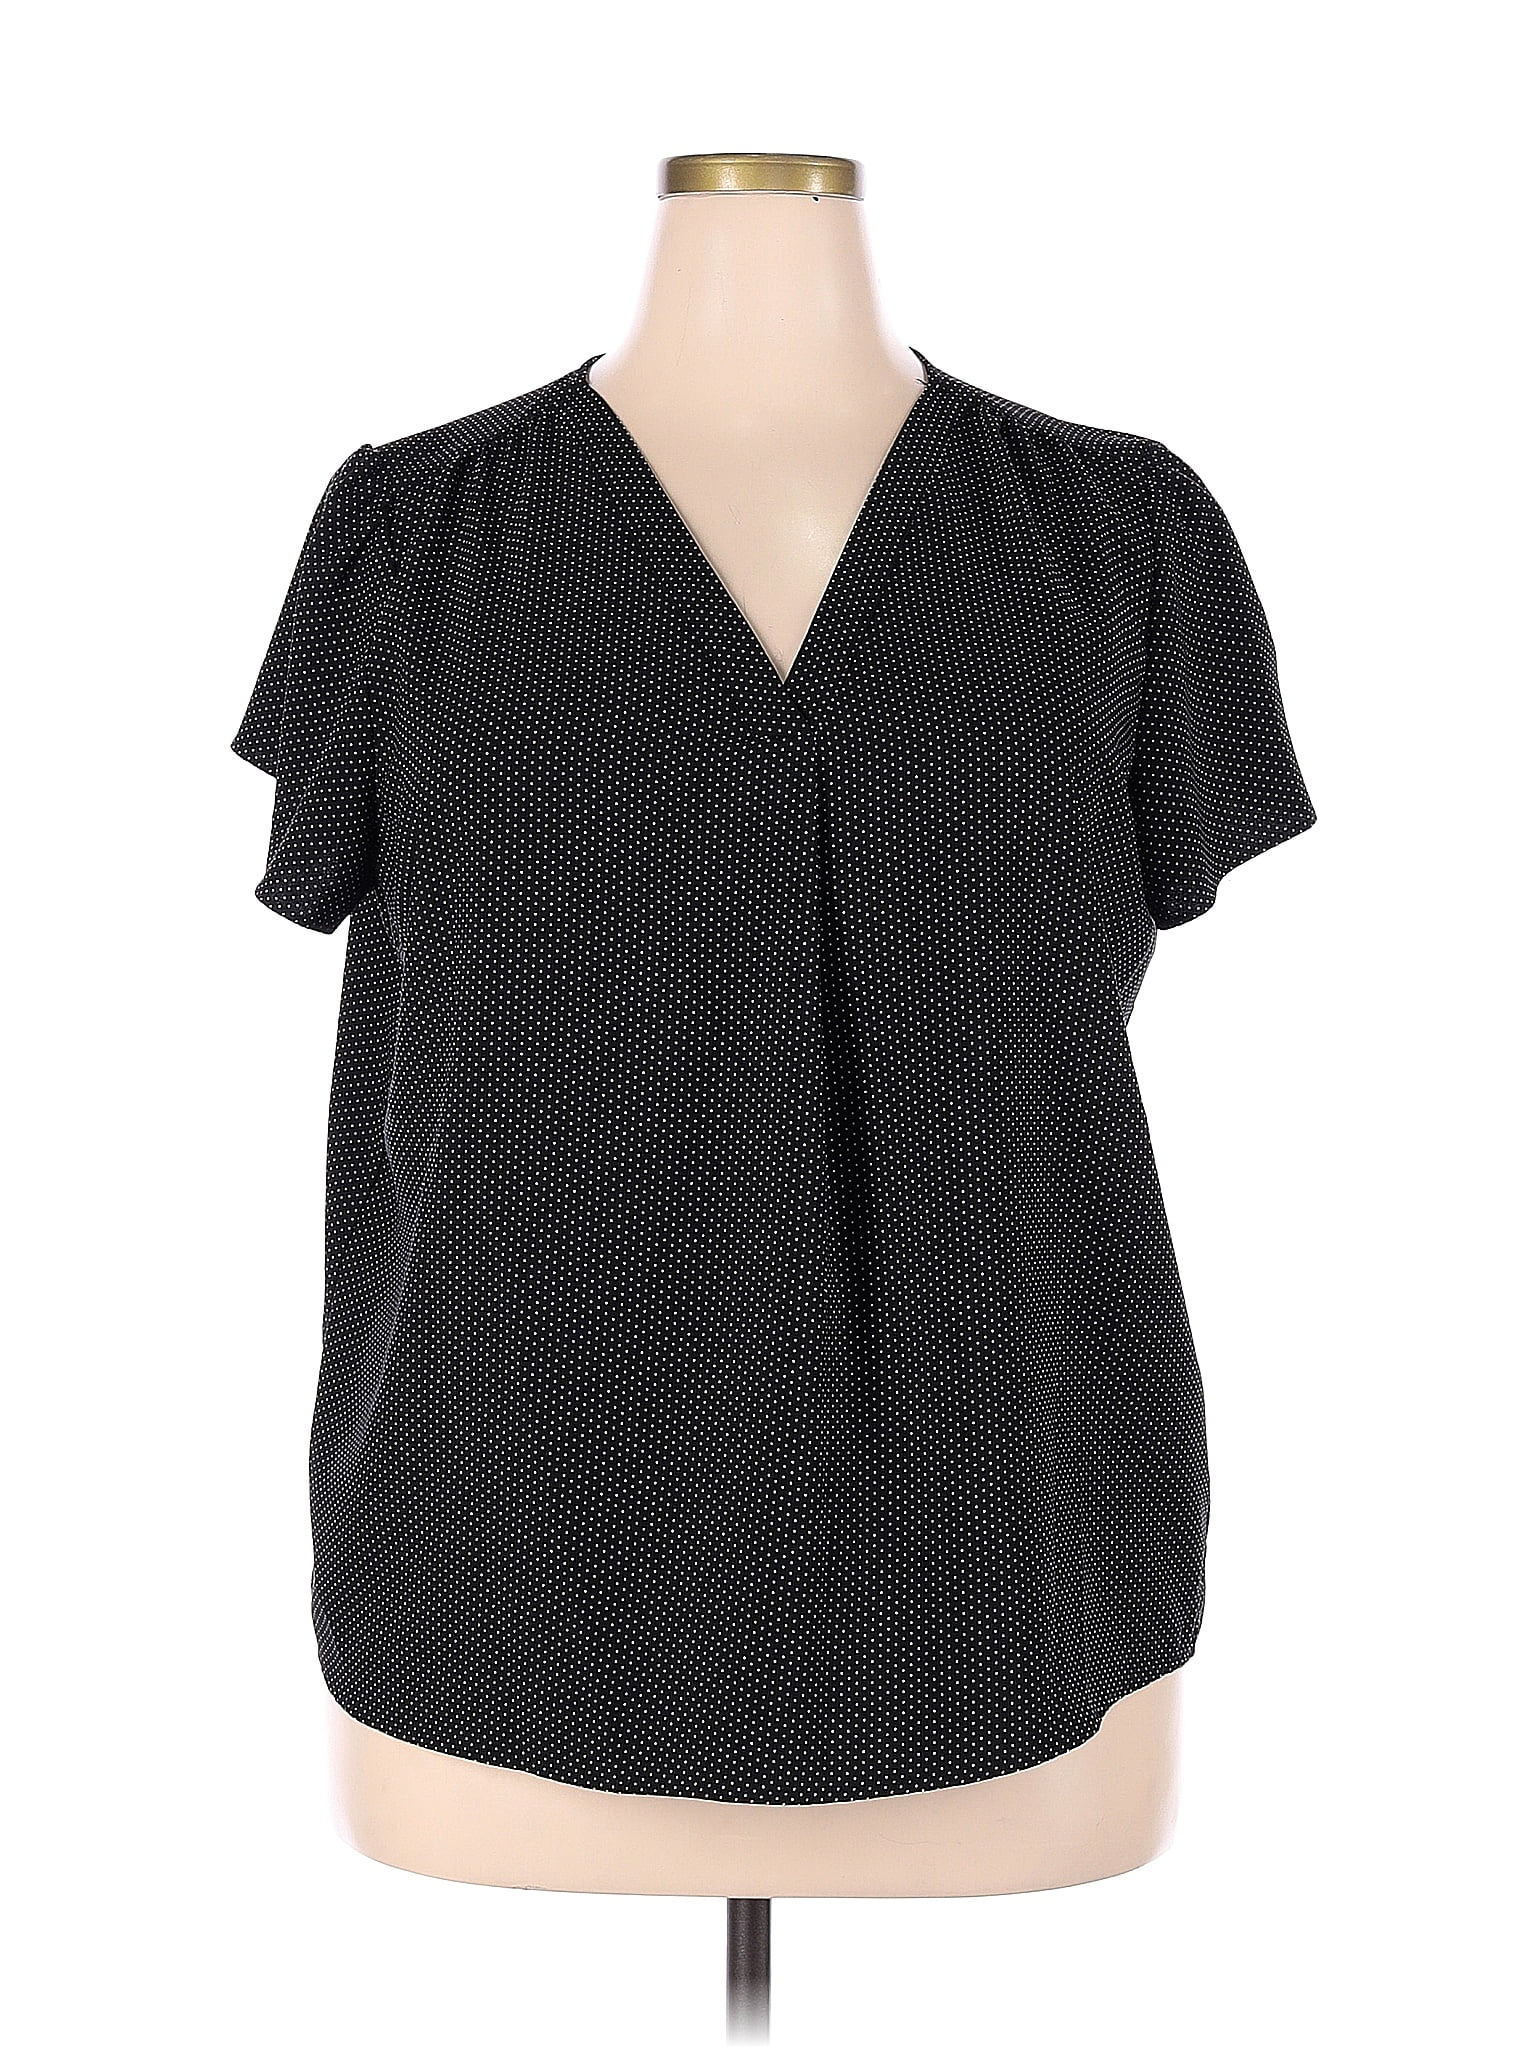 Hilary Radley 100% Polyester Polka Dots Black Short Sleeve Blouse Size ...